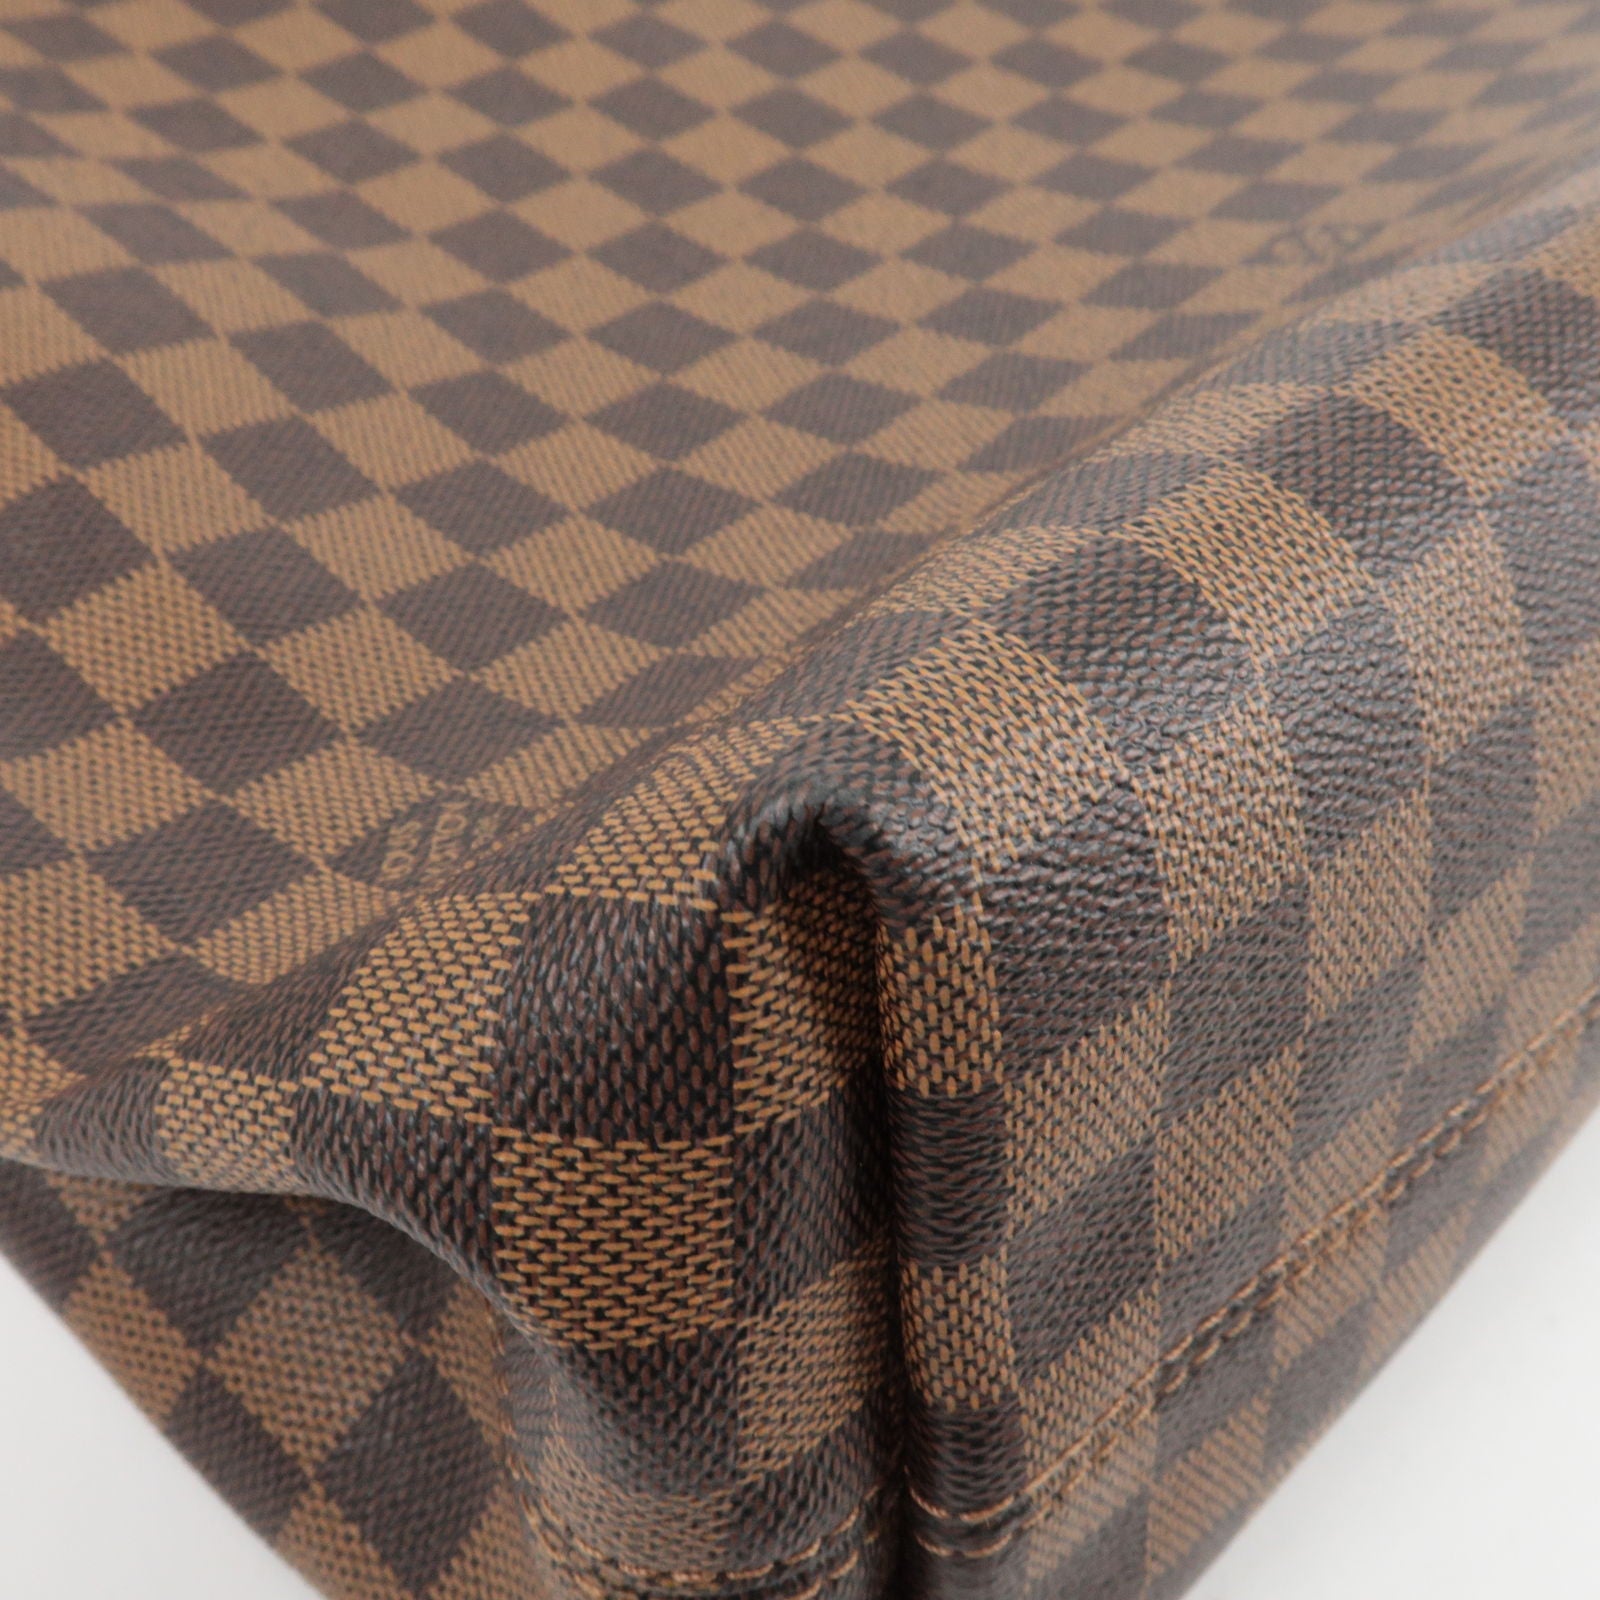 Authentic Louis Vuitton Damier Ebene Graceful MM Hobo Bag N44045